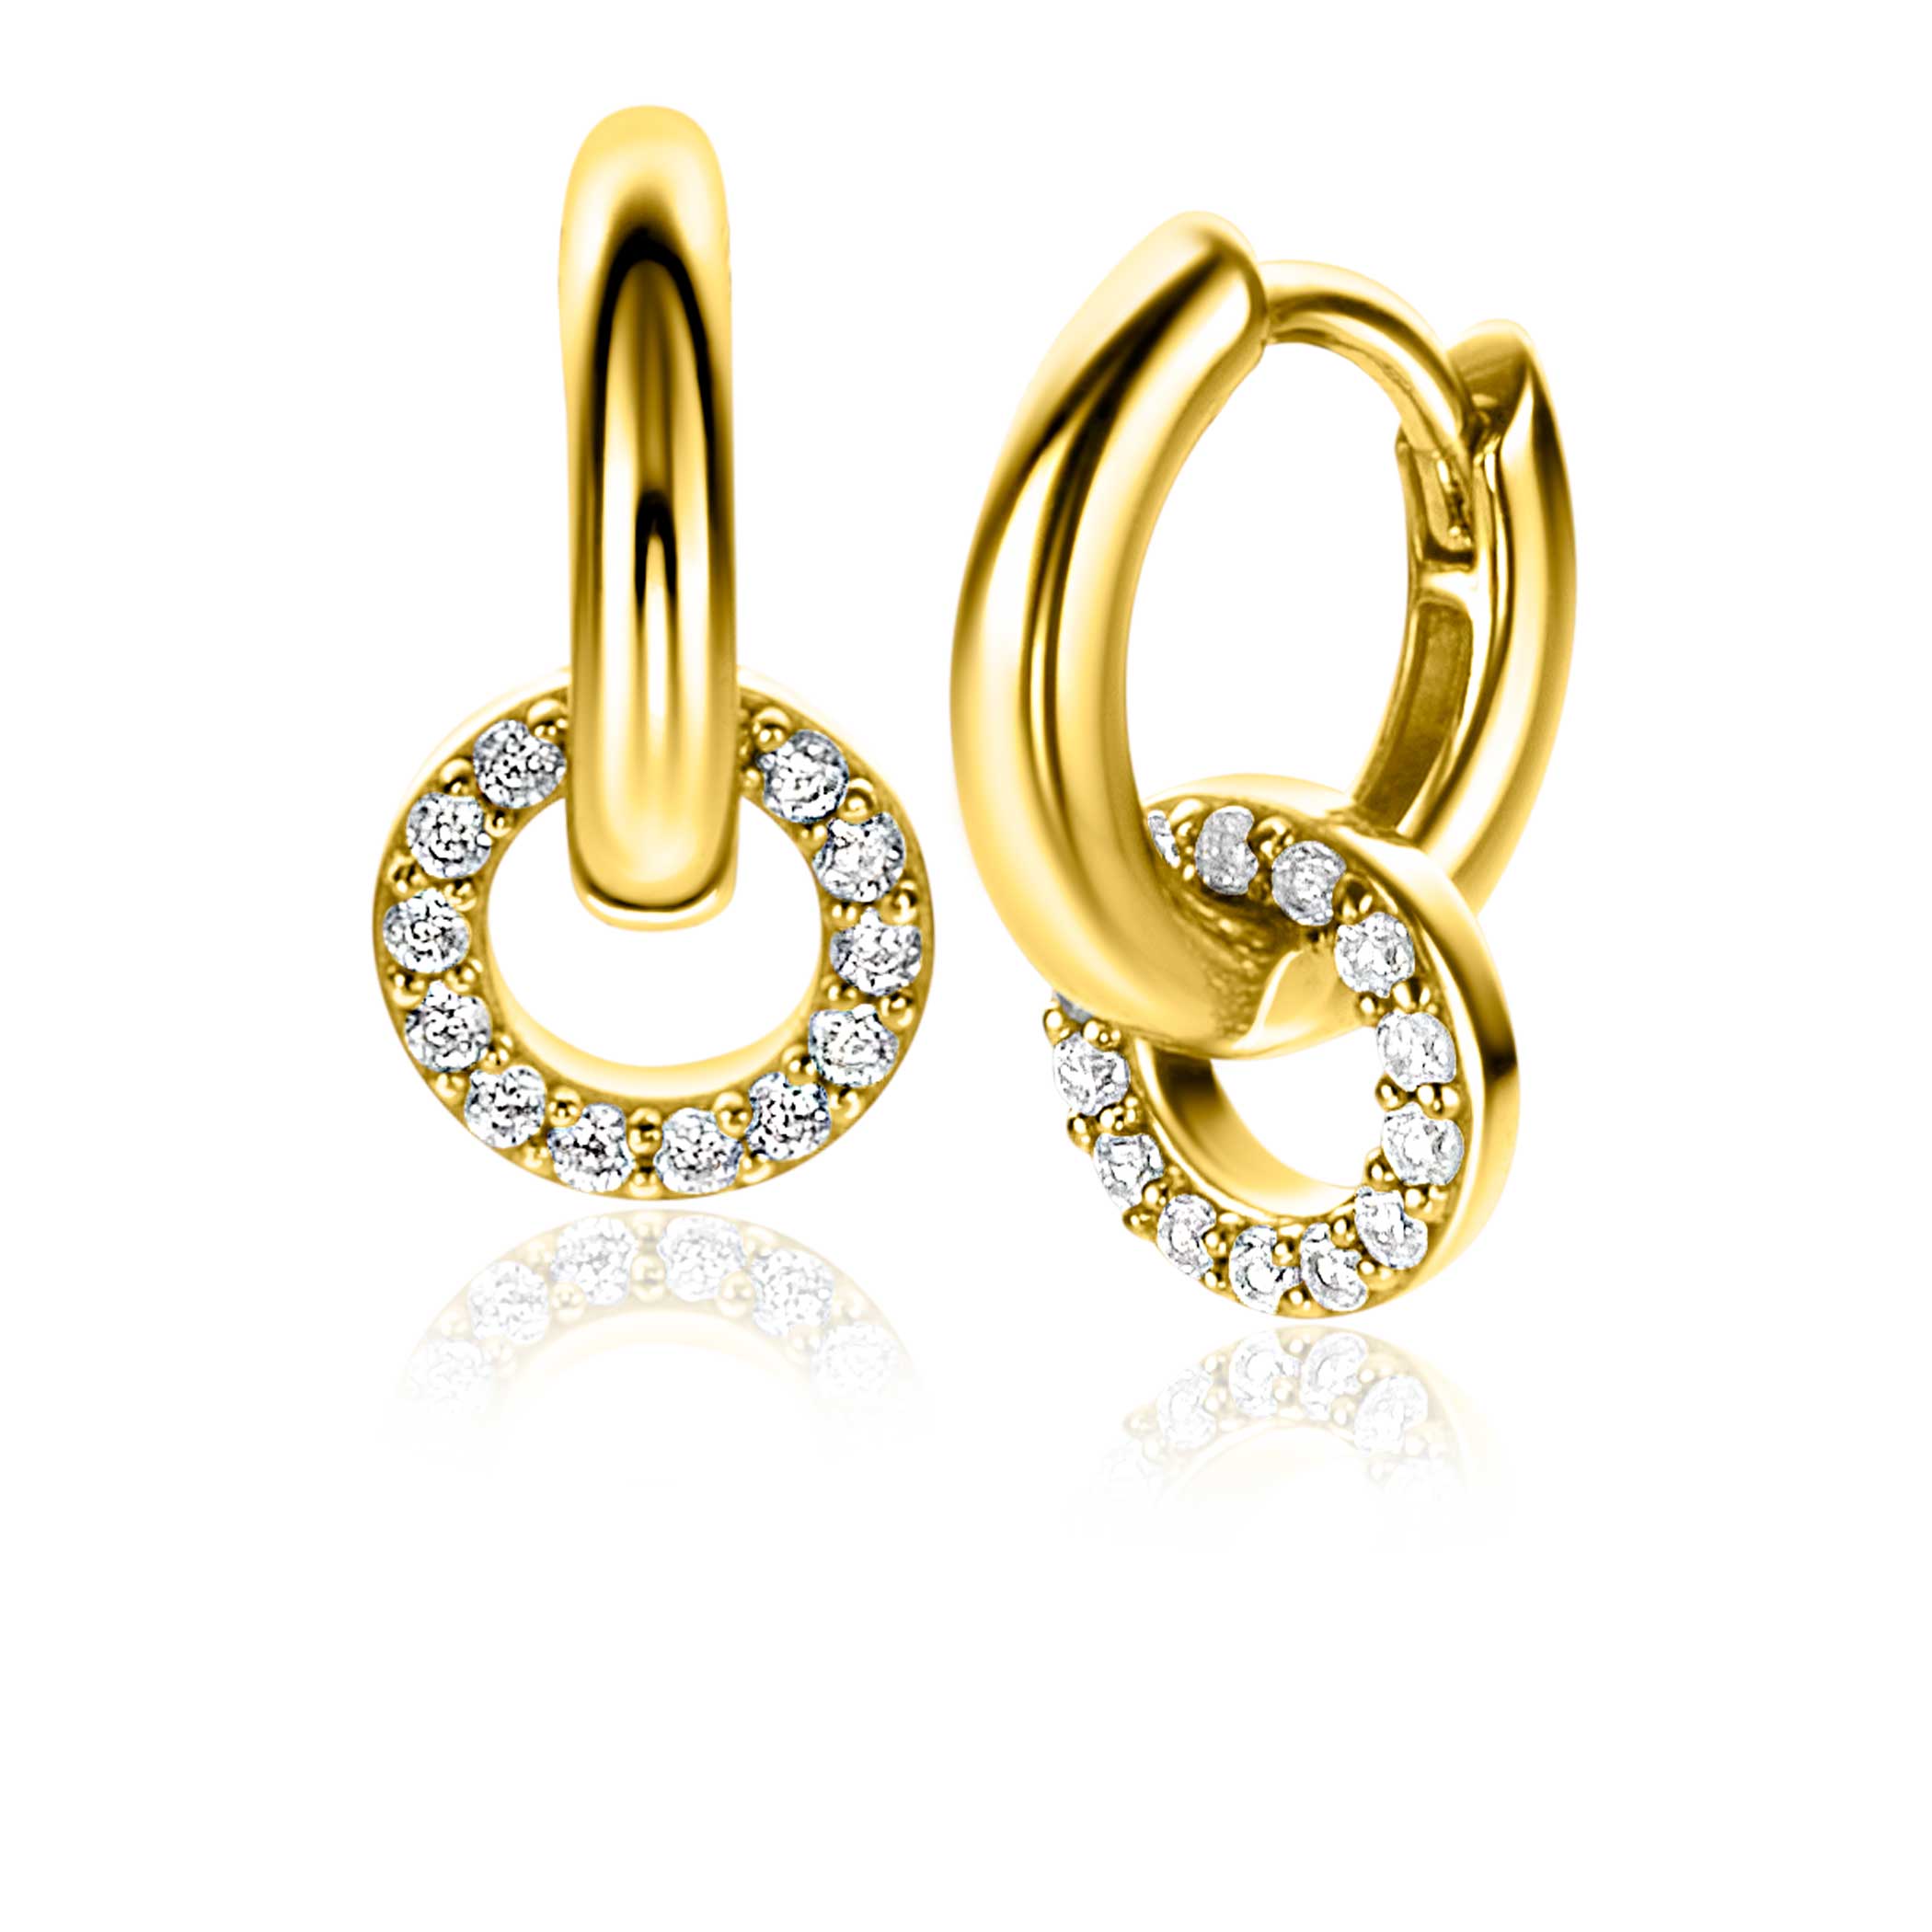 7,5mm ZINZI Gold Plated Sterling Silver Earrings Pendants Round White Zirconias ZICH2550Y (excl. hoop earrings)